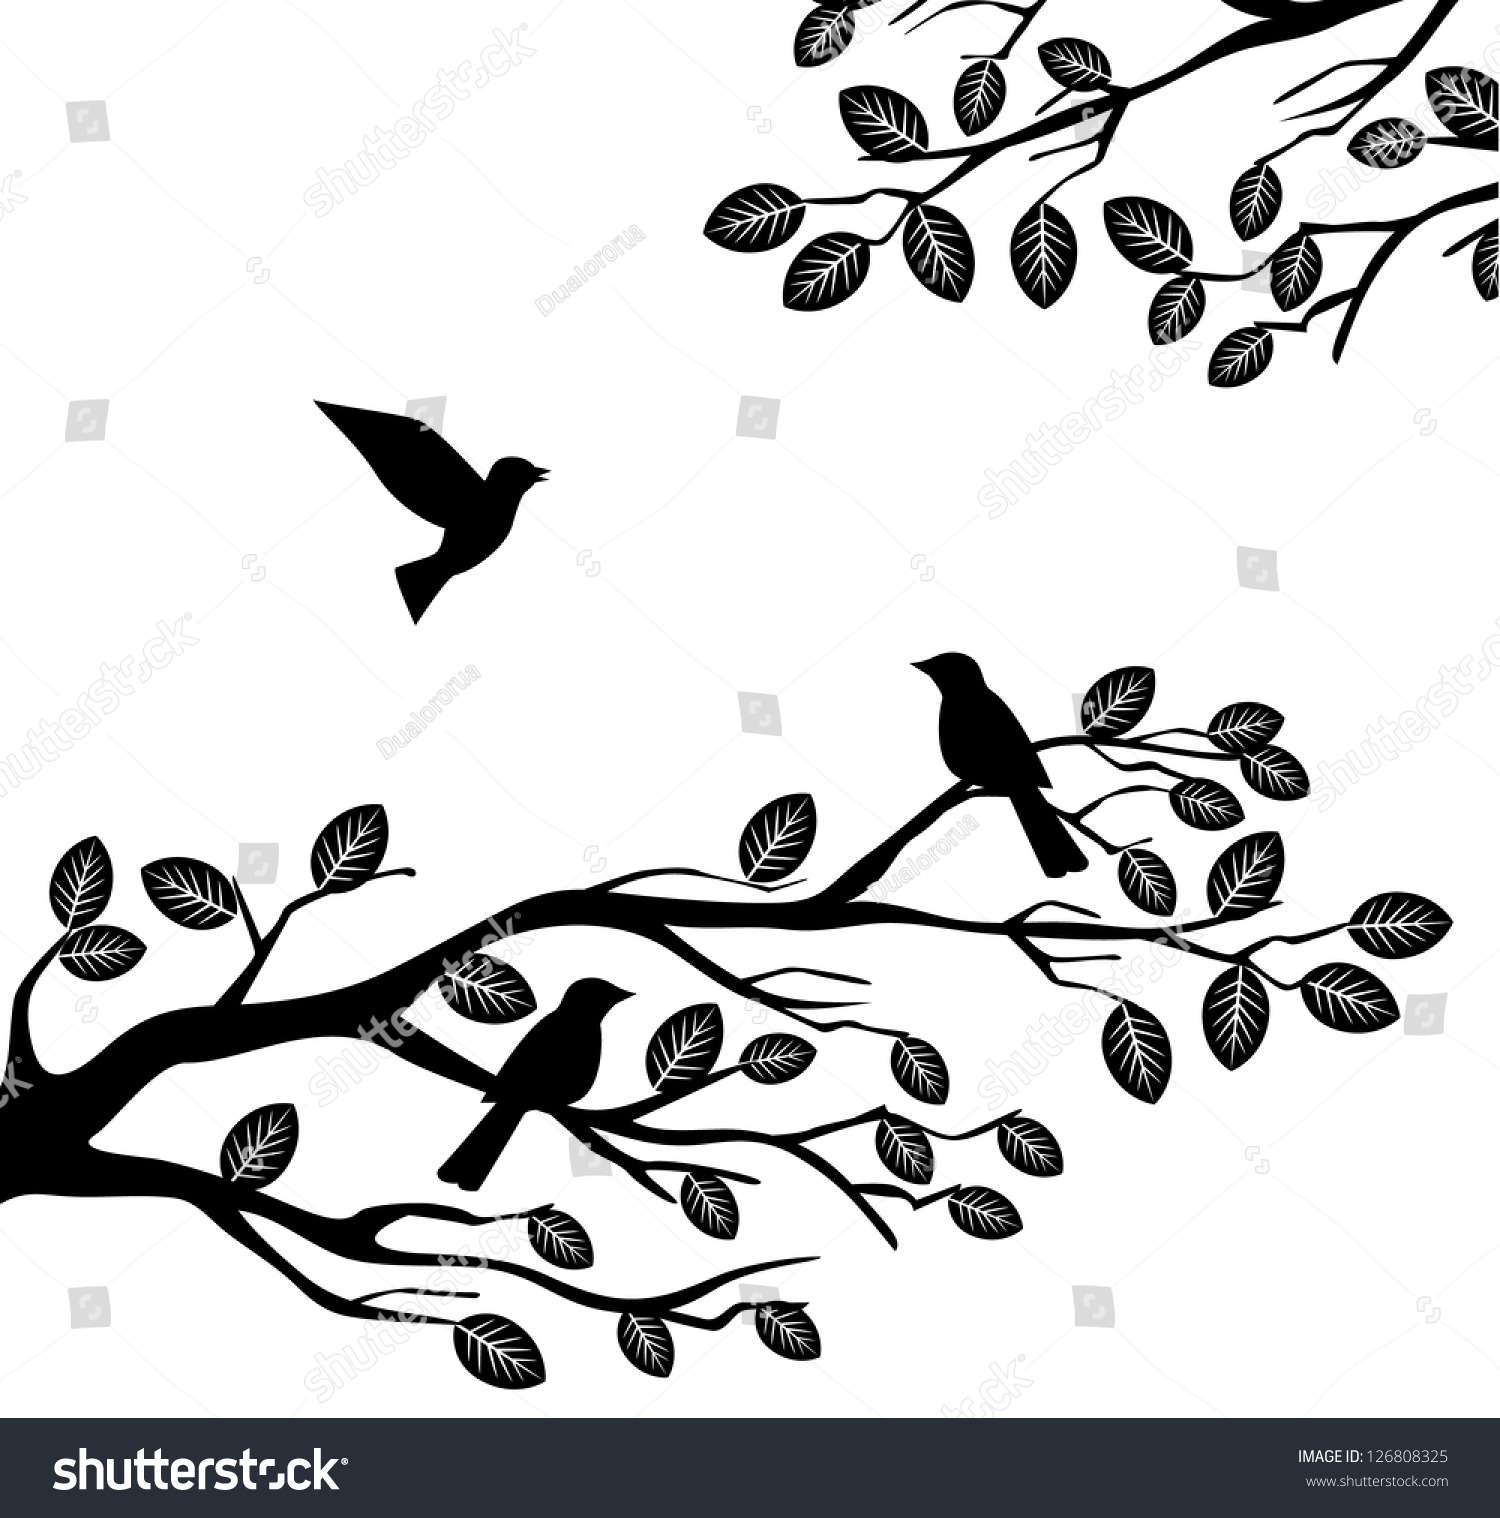 Bird And Tree Silhouette Stock Photo 126808325 : Shutterstock